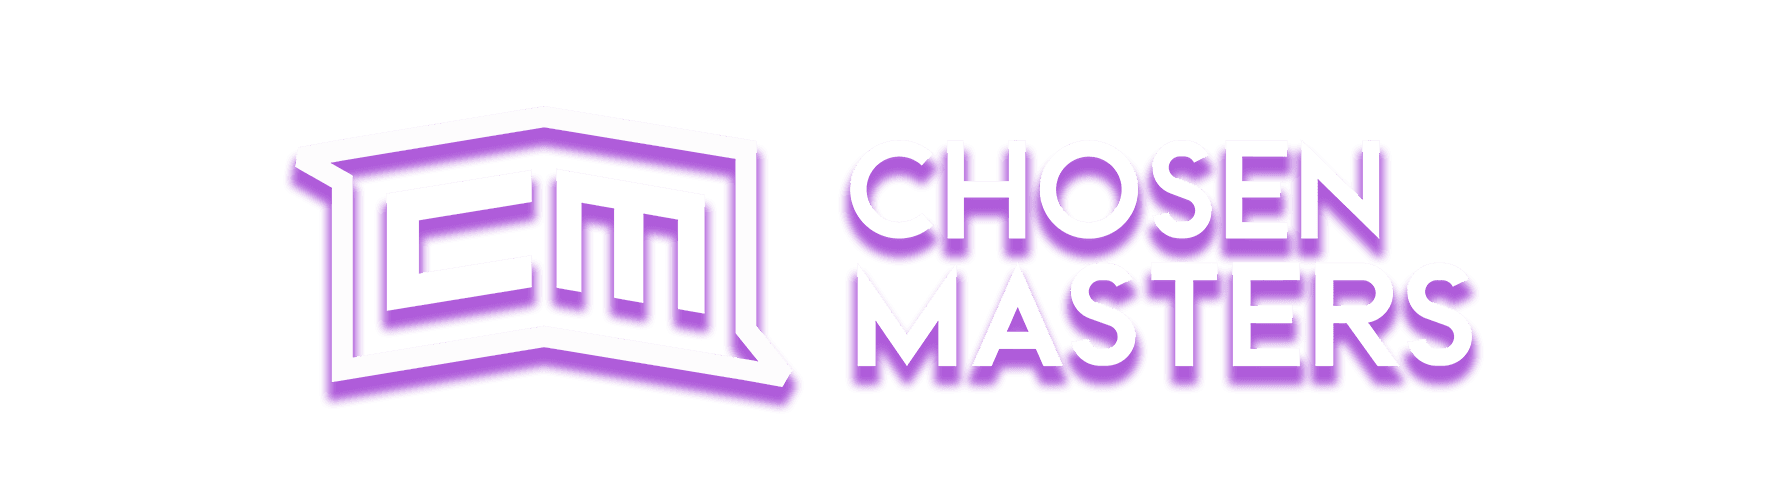 Chosen Masters logo full